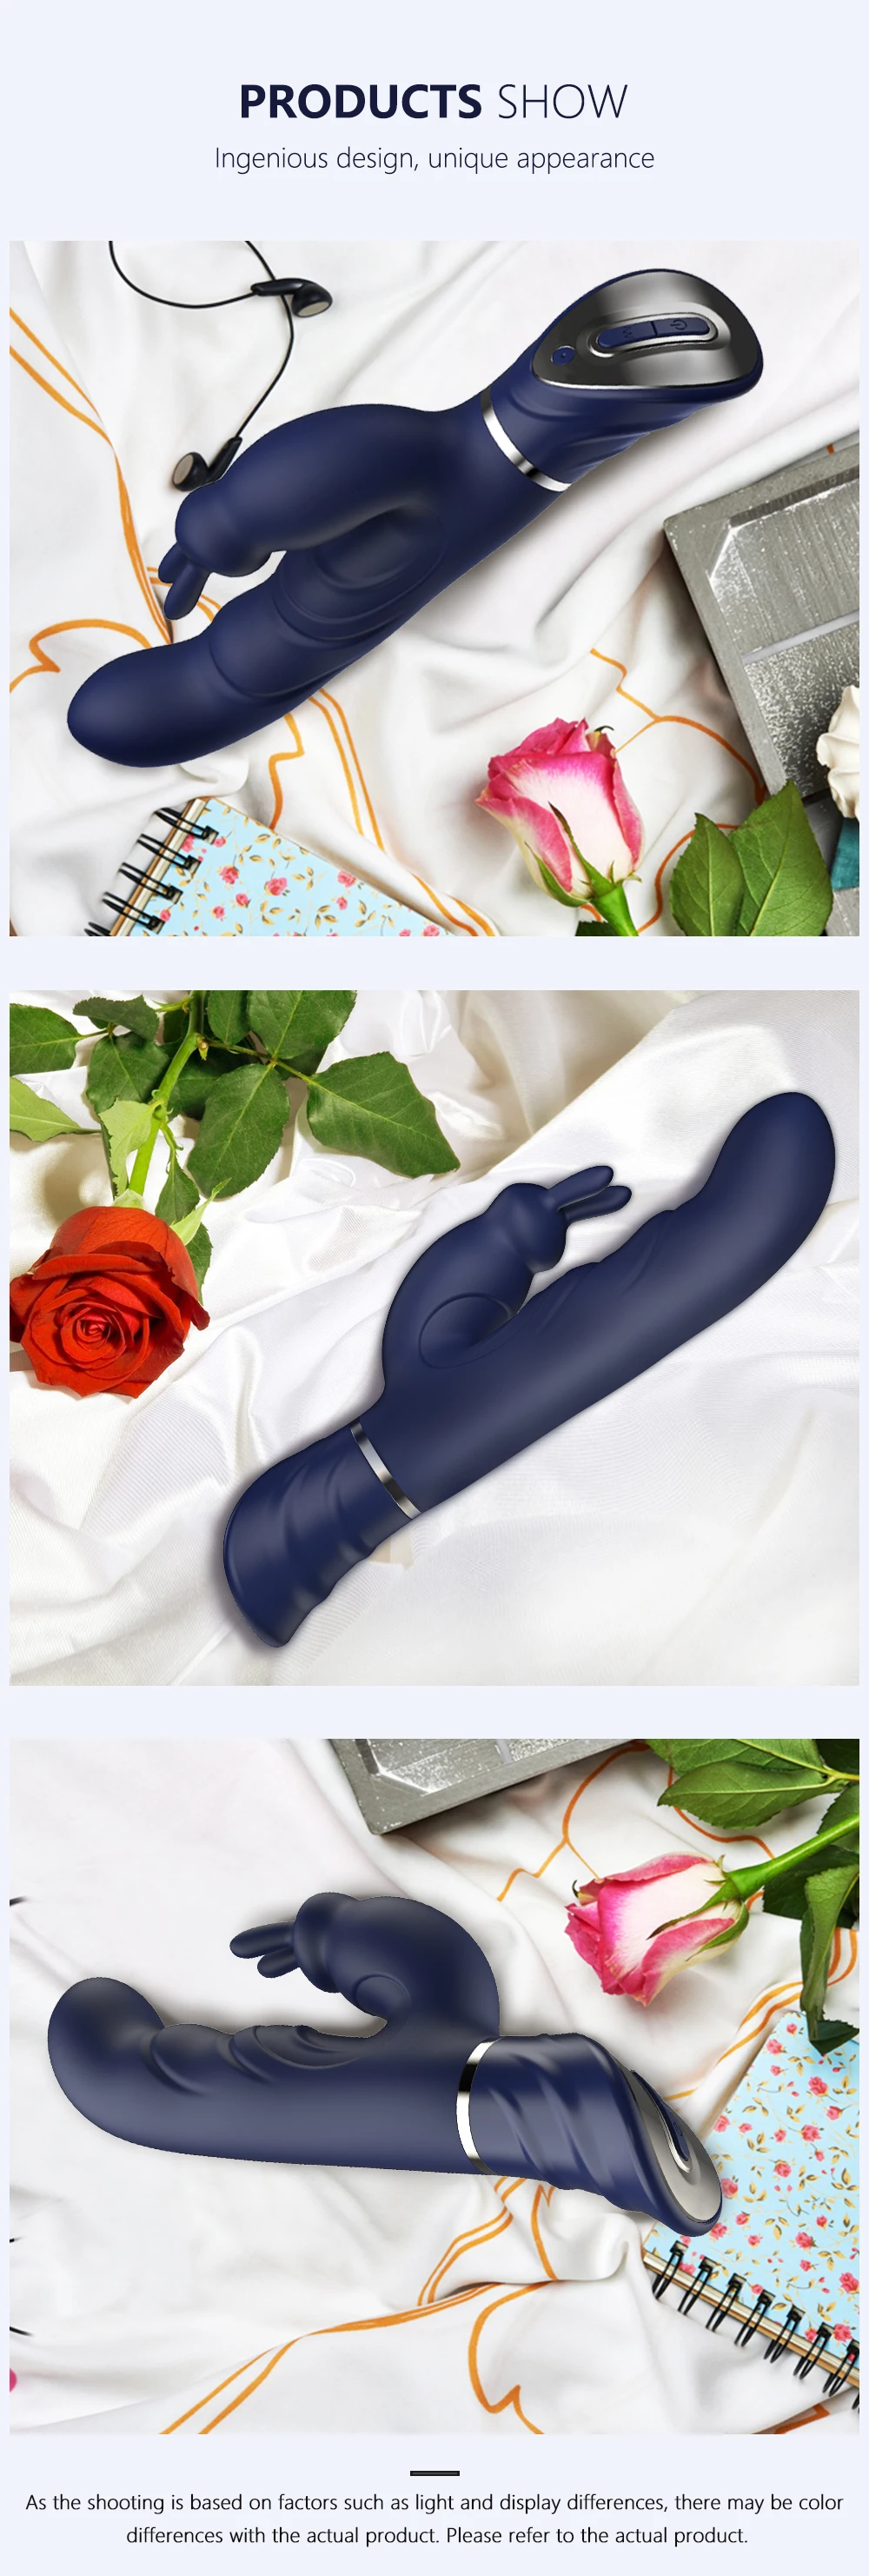 OEM Super Powerful G-Spot Rabbit Vibrator For Women Clitoris Stimulator Dildo Vibrating Female Massager Sex Toys Goods For Adults 18 Sd4df6e8ea81f42e093105a8ded42c598b